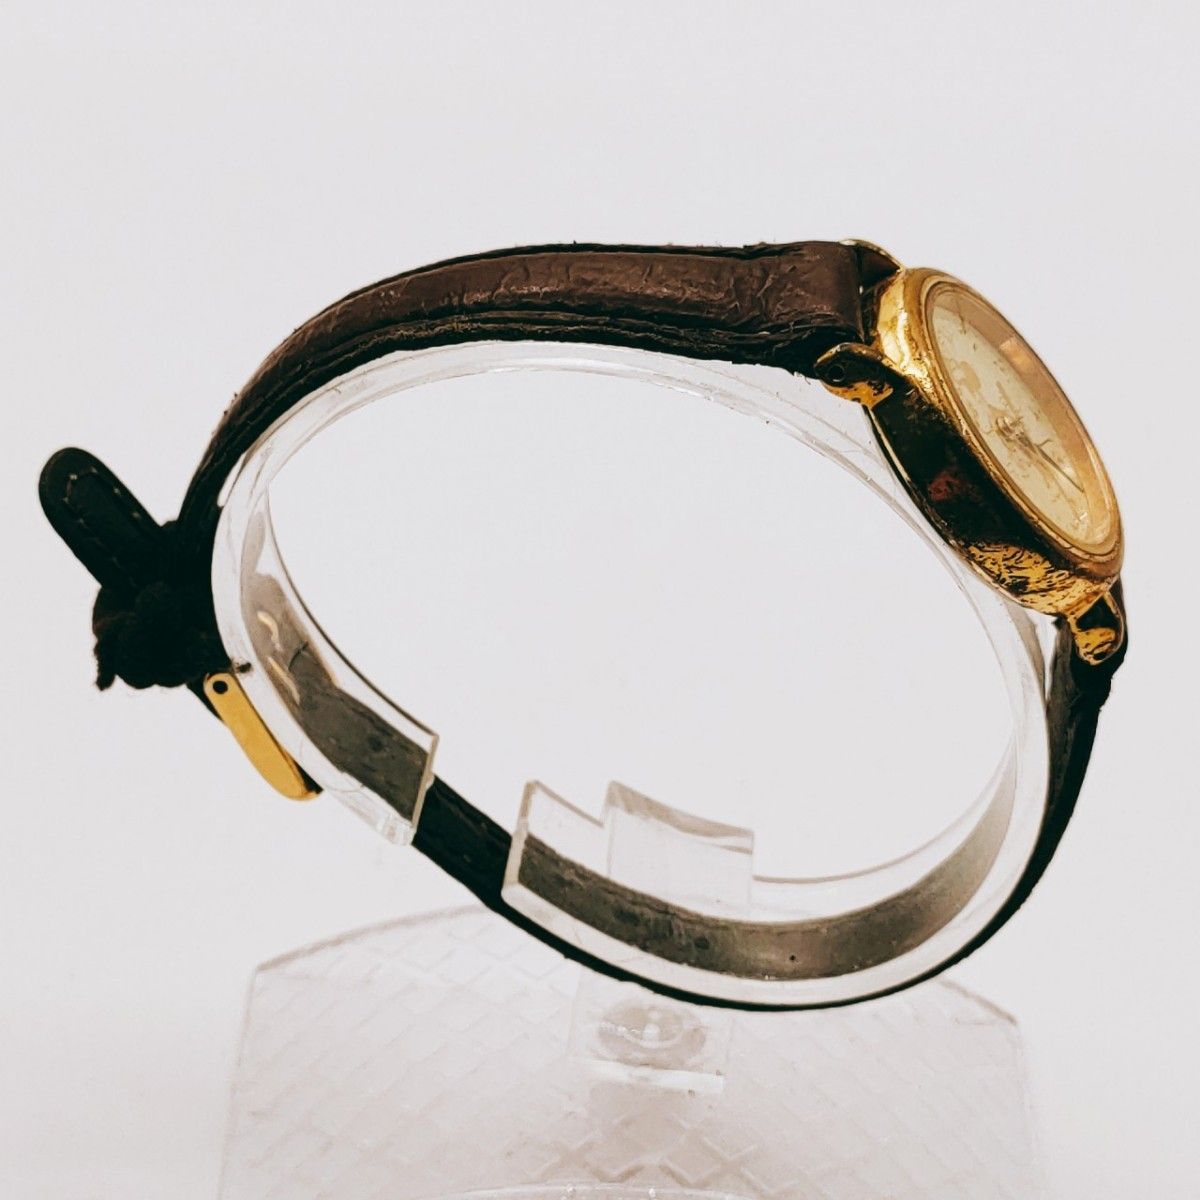 #123【Disney】SEIKO セイコー ALBA アルバ V501-6N10 腕時計 アナログ 3針 白文字盤 ゴールド色